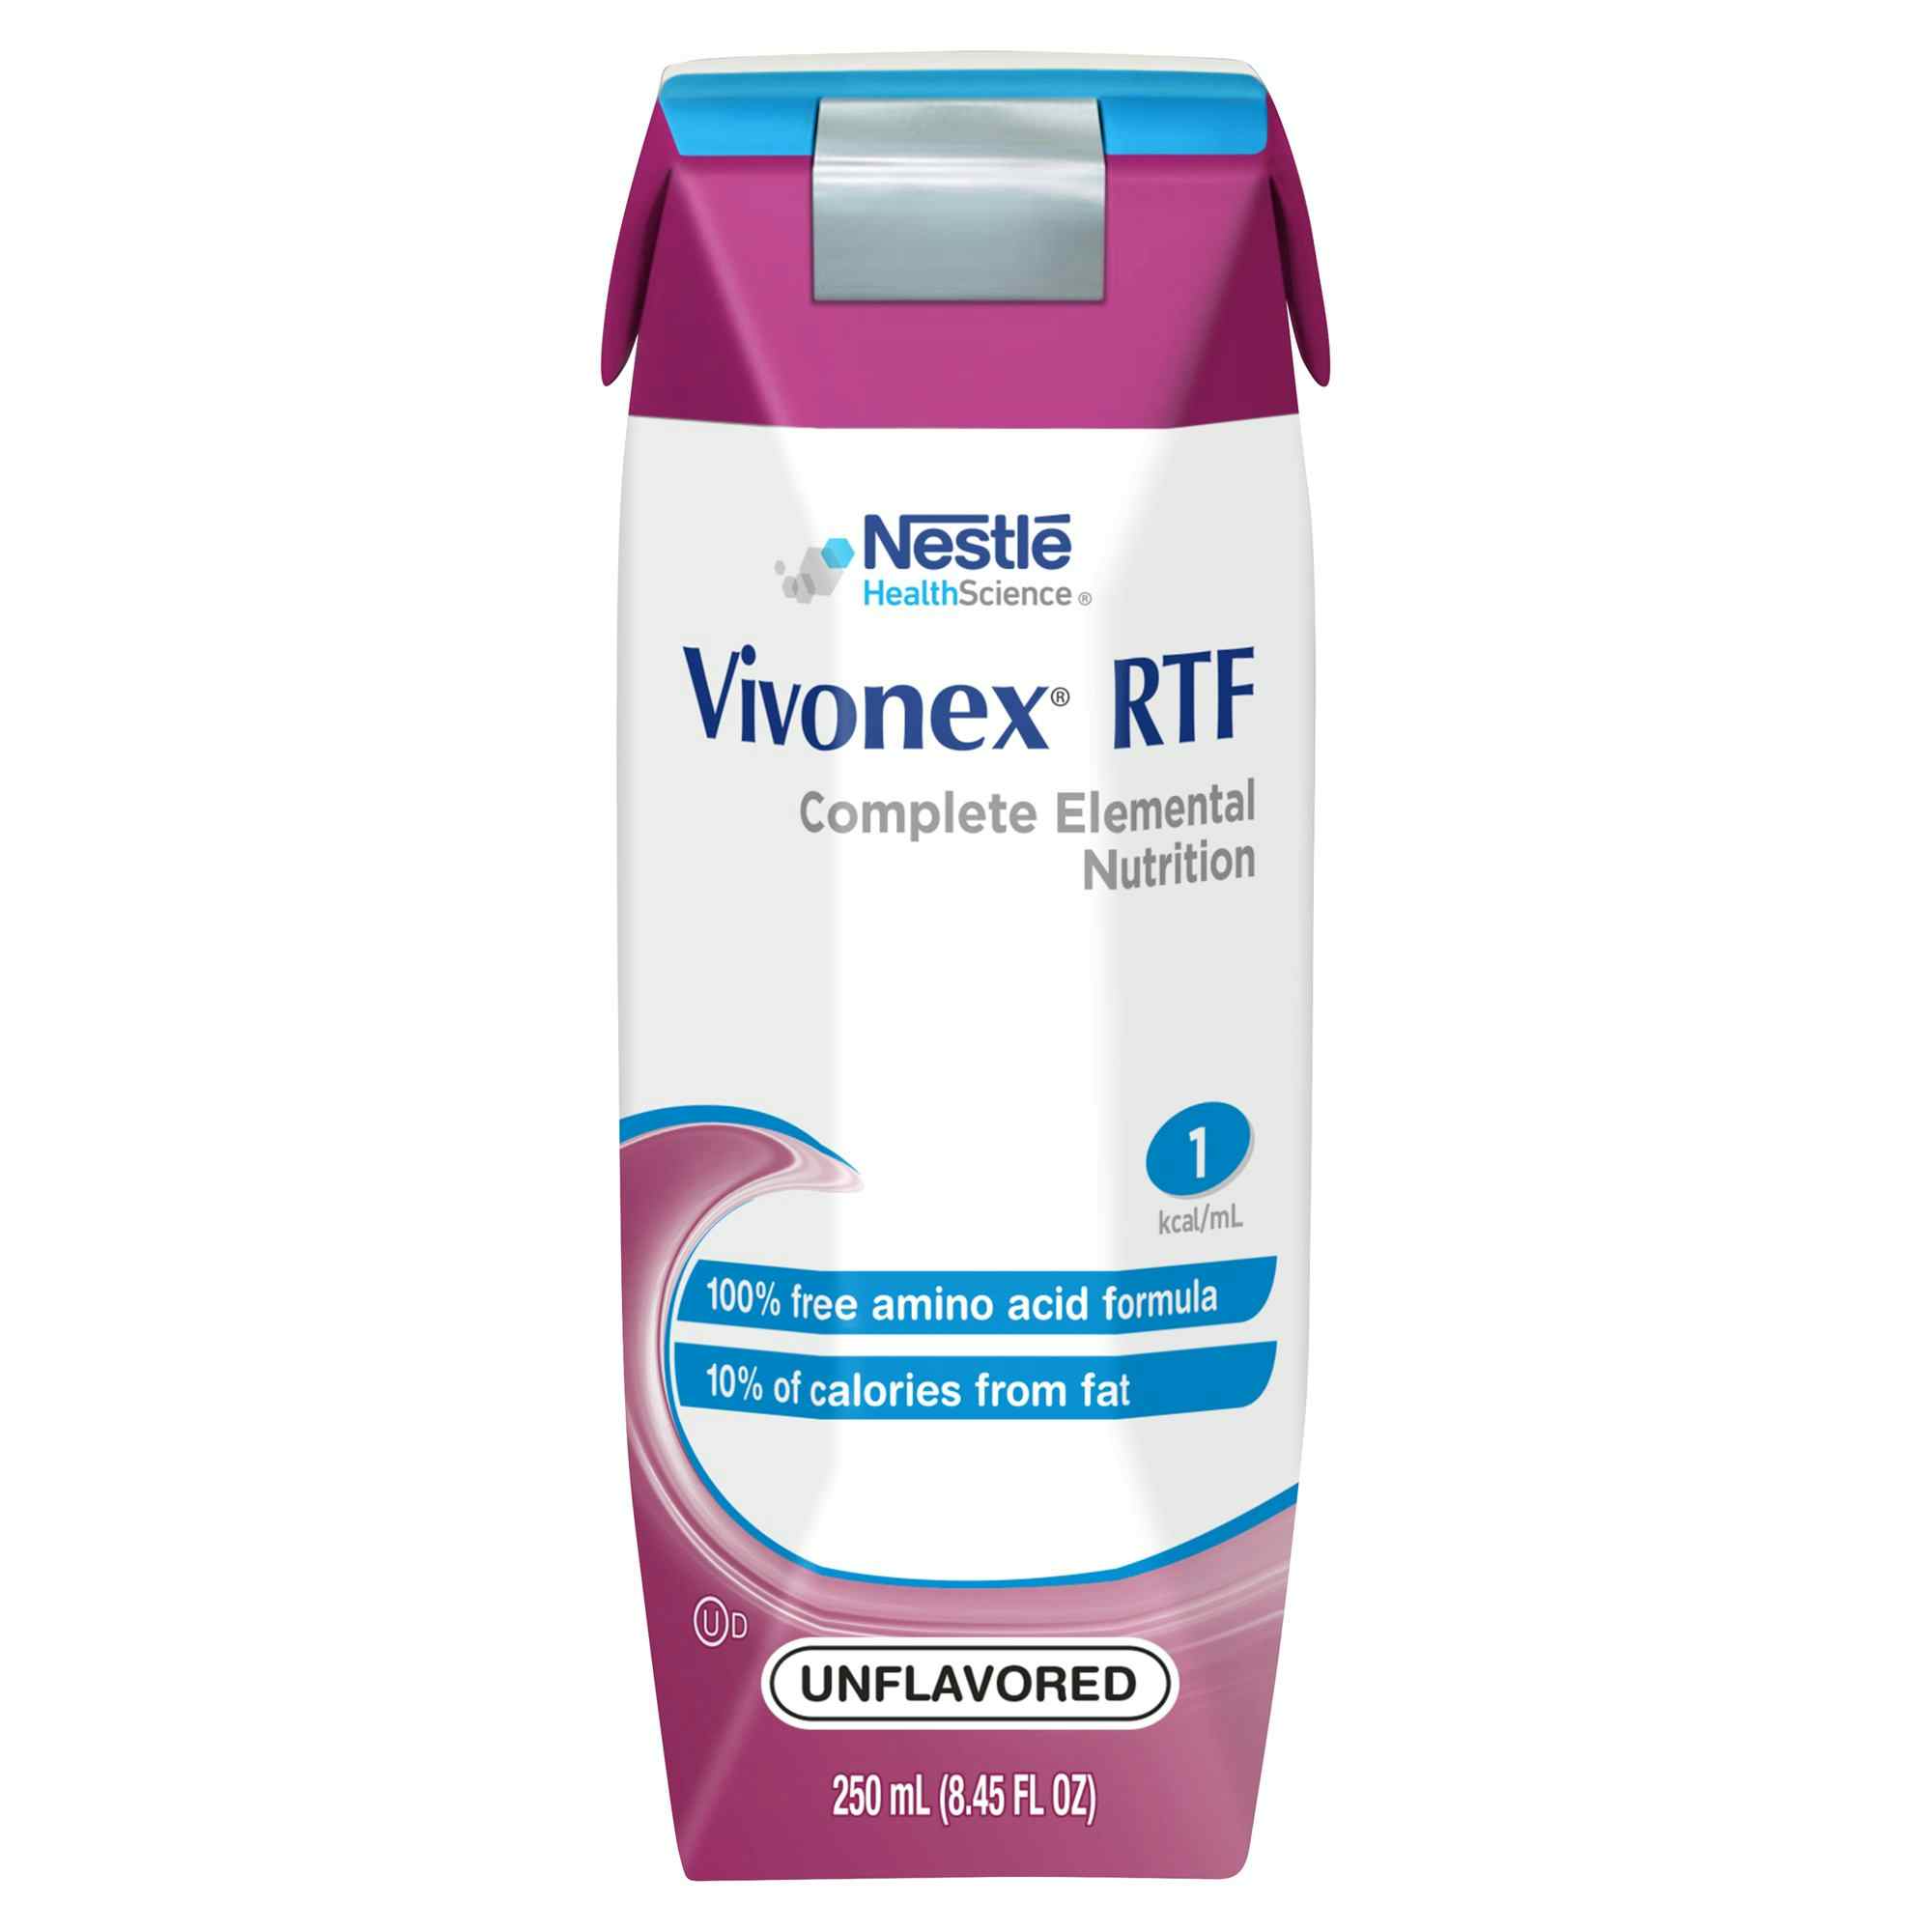 Nestle HealthScience Vivonex RTF Complete Elemental Nutrition Tube Feeding Formula, 8.45 oz., 10043900362509, 1 Each